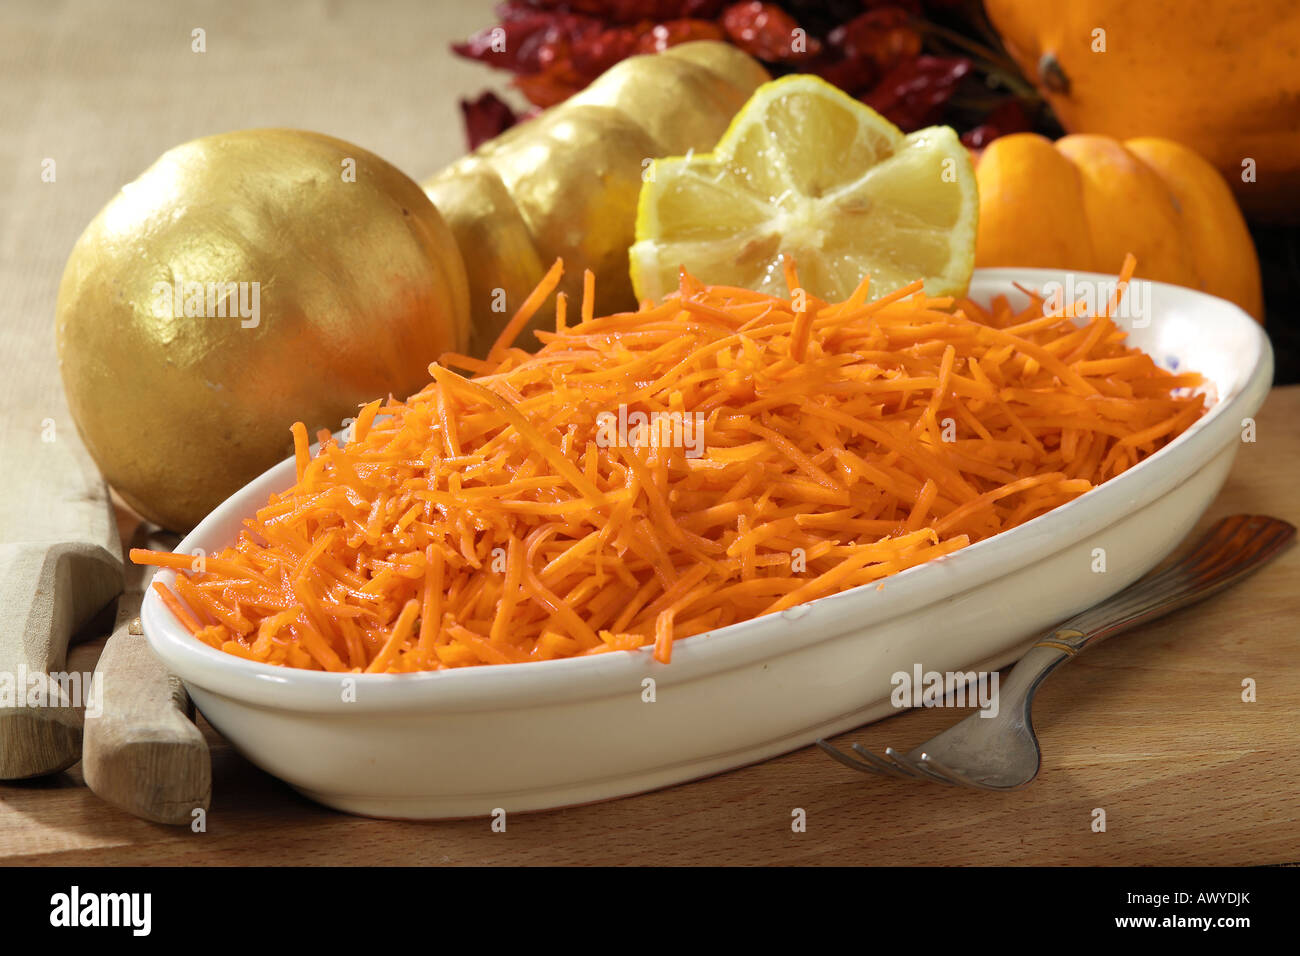 julienne carrots salade Stock Photo